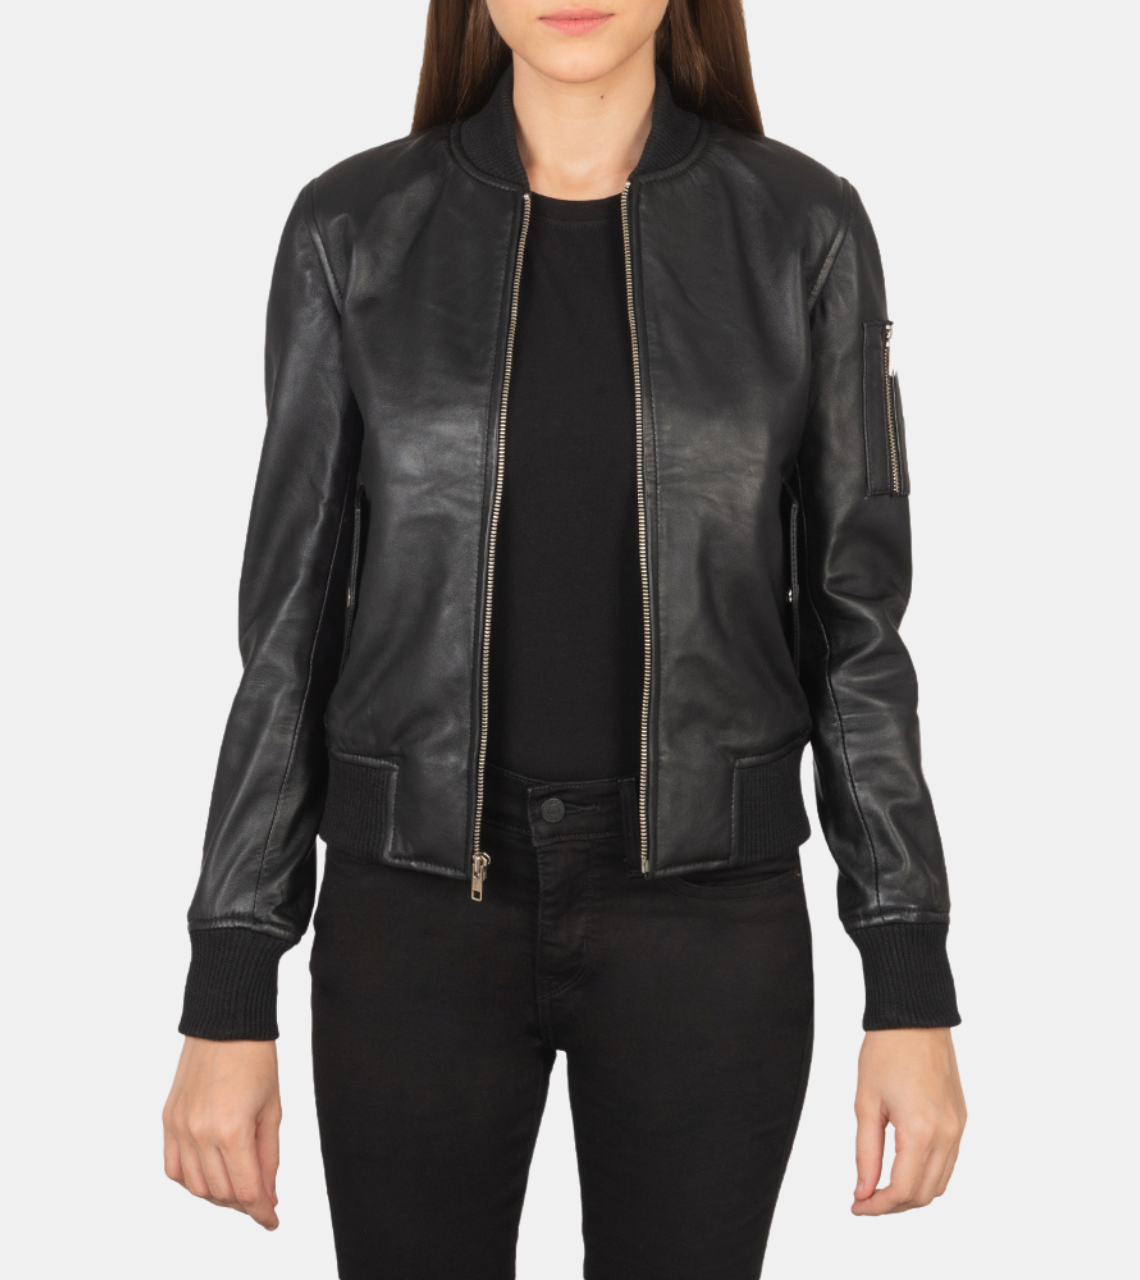 Carver Women's Black Bomber Leather Jacket